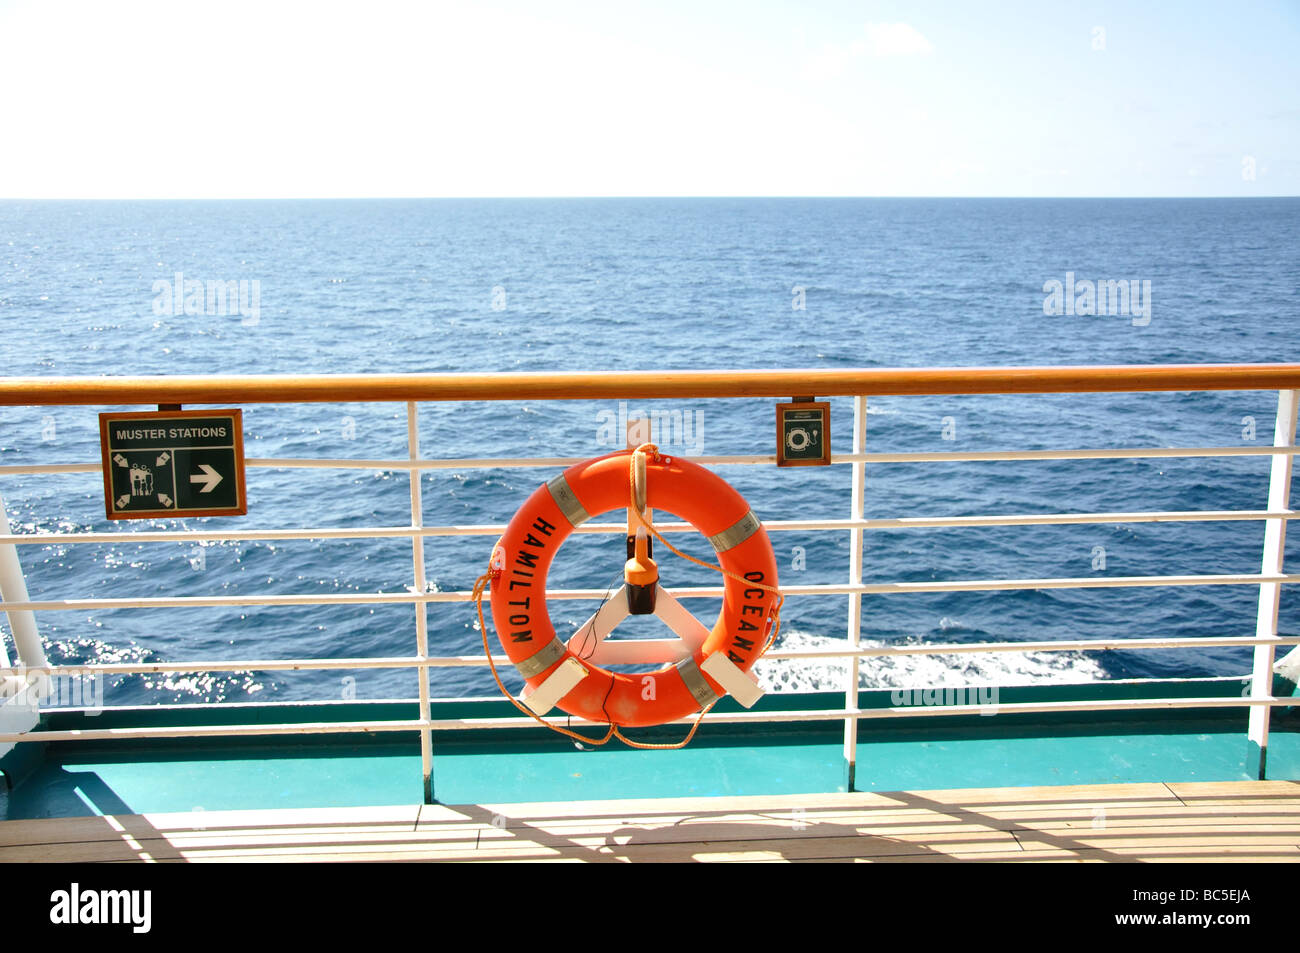 Garde-corps de pont, P&O Oceana Cruise Ship, Mer du Nord, de l'Europe Banque D'Images